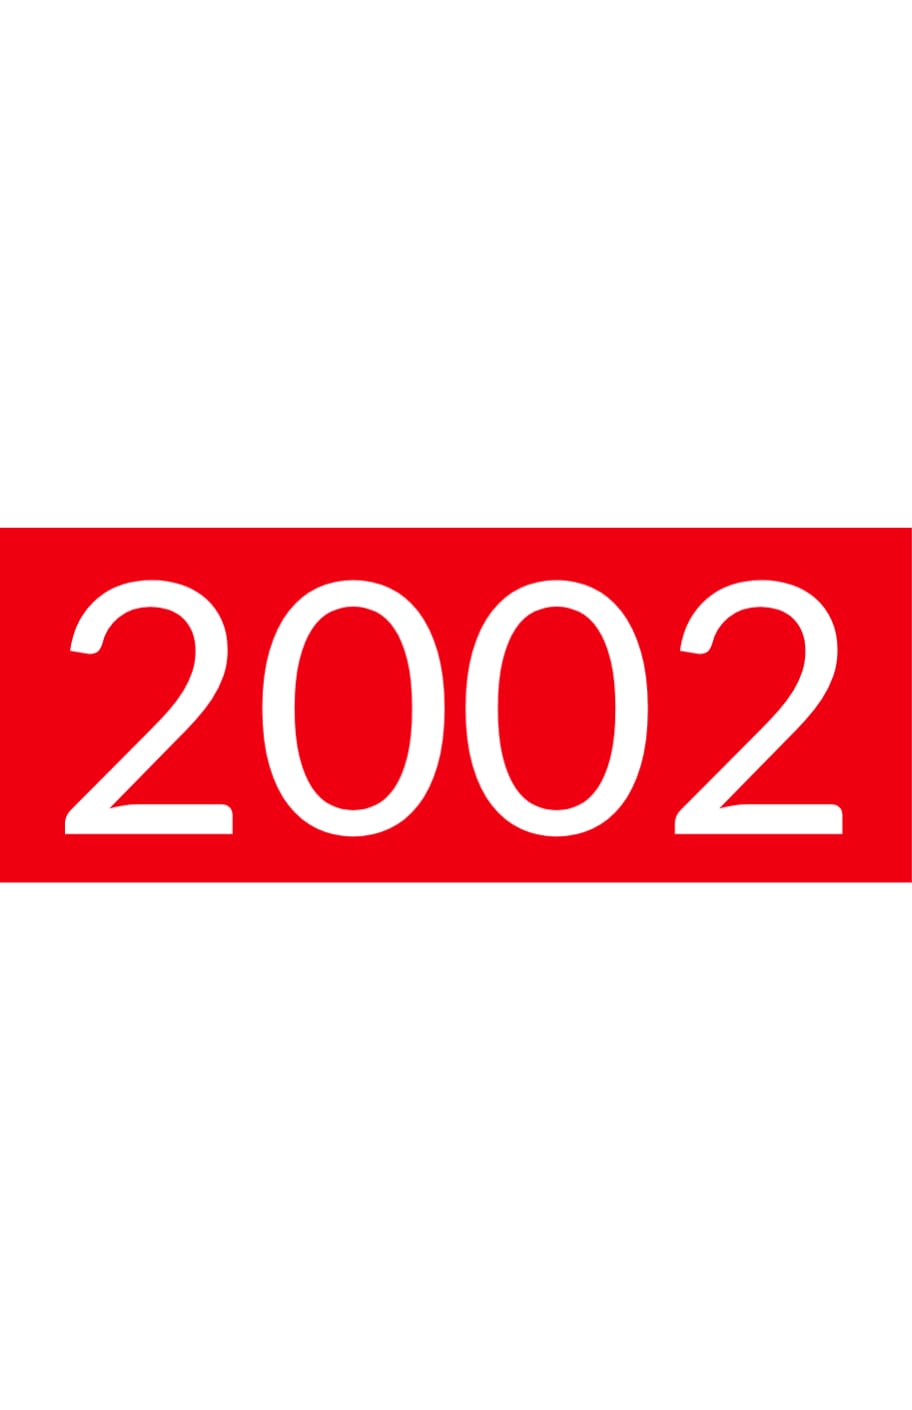 Orange rectangle with white text: 2002